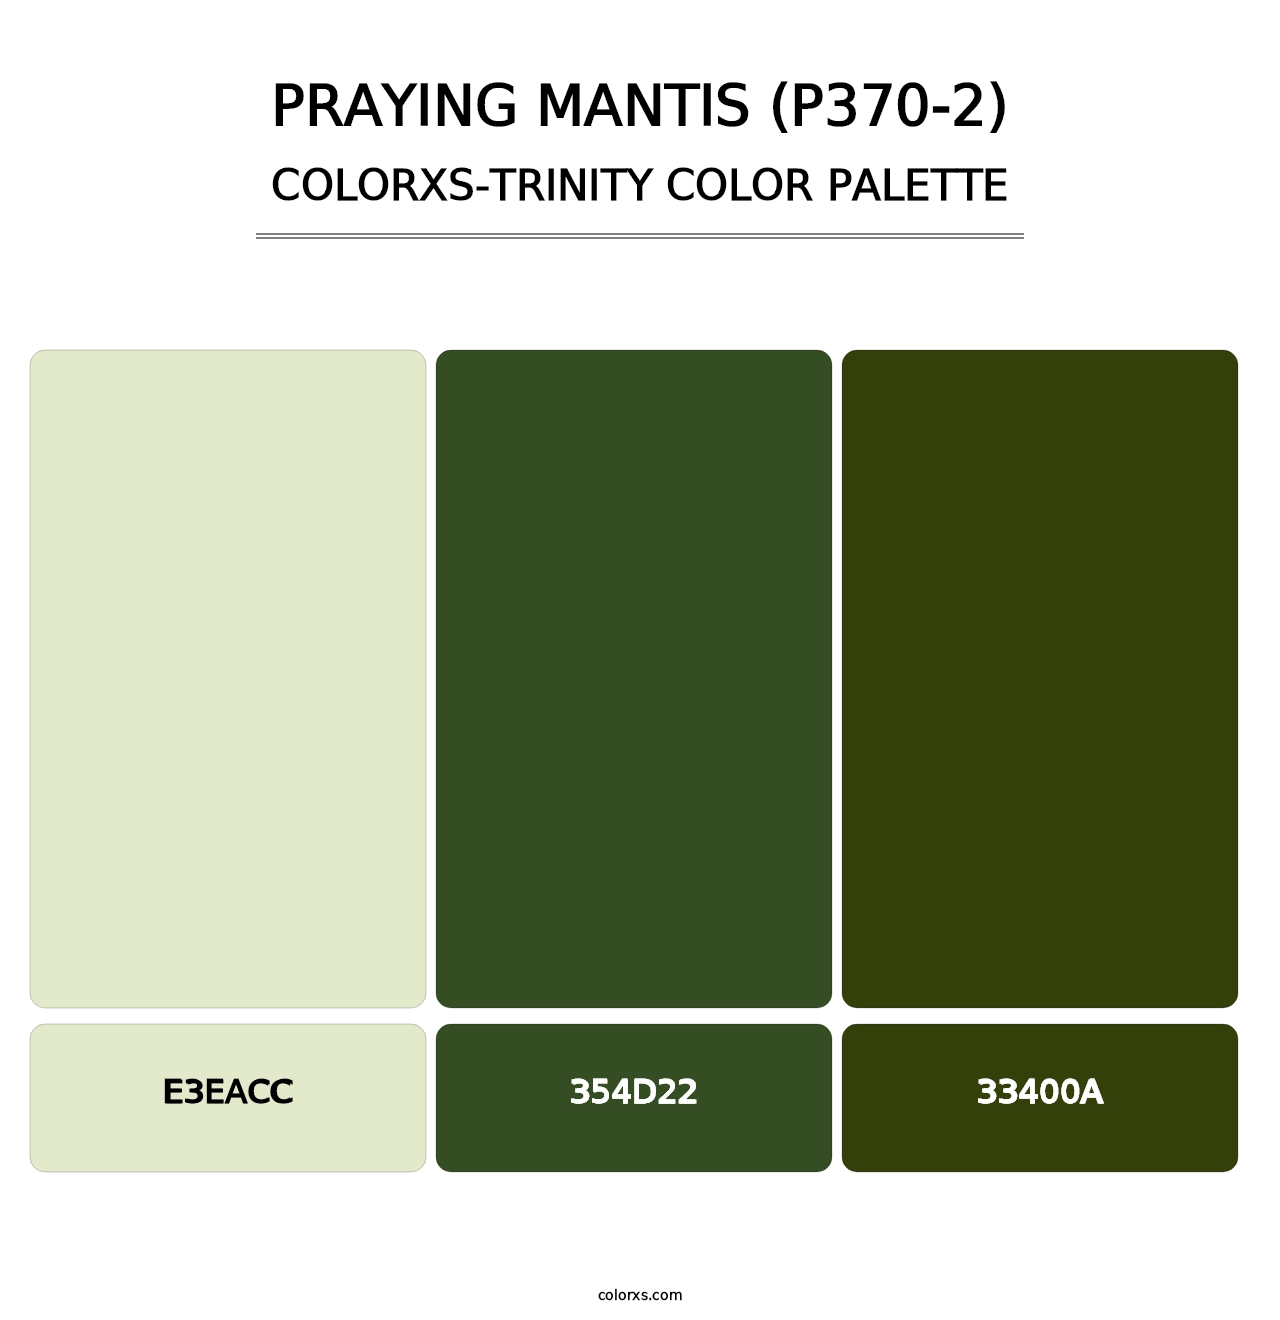 Praying Mantis (P370-2) - Colorxs Trinity Palette